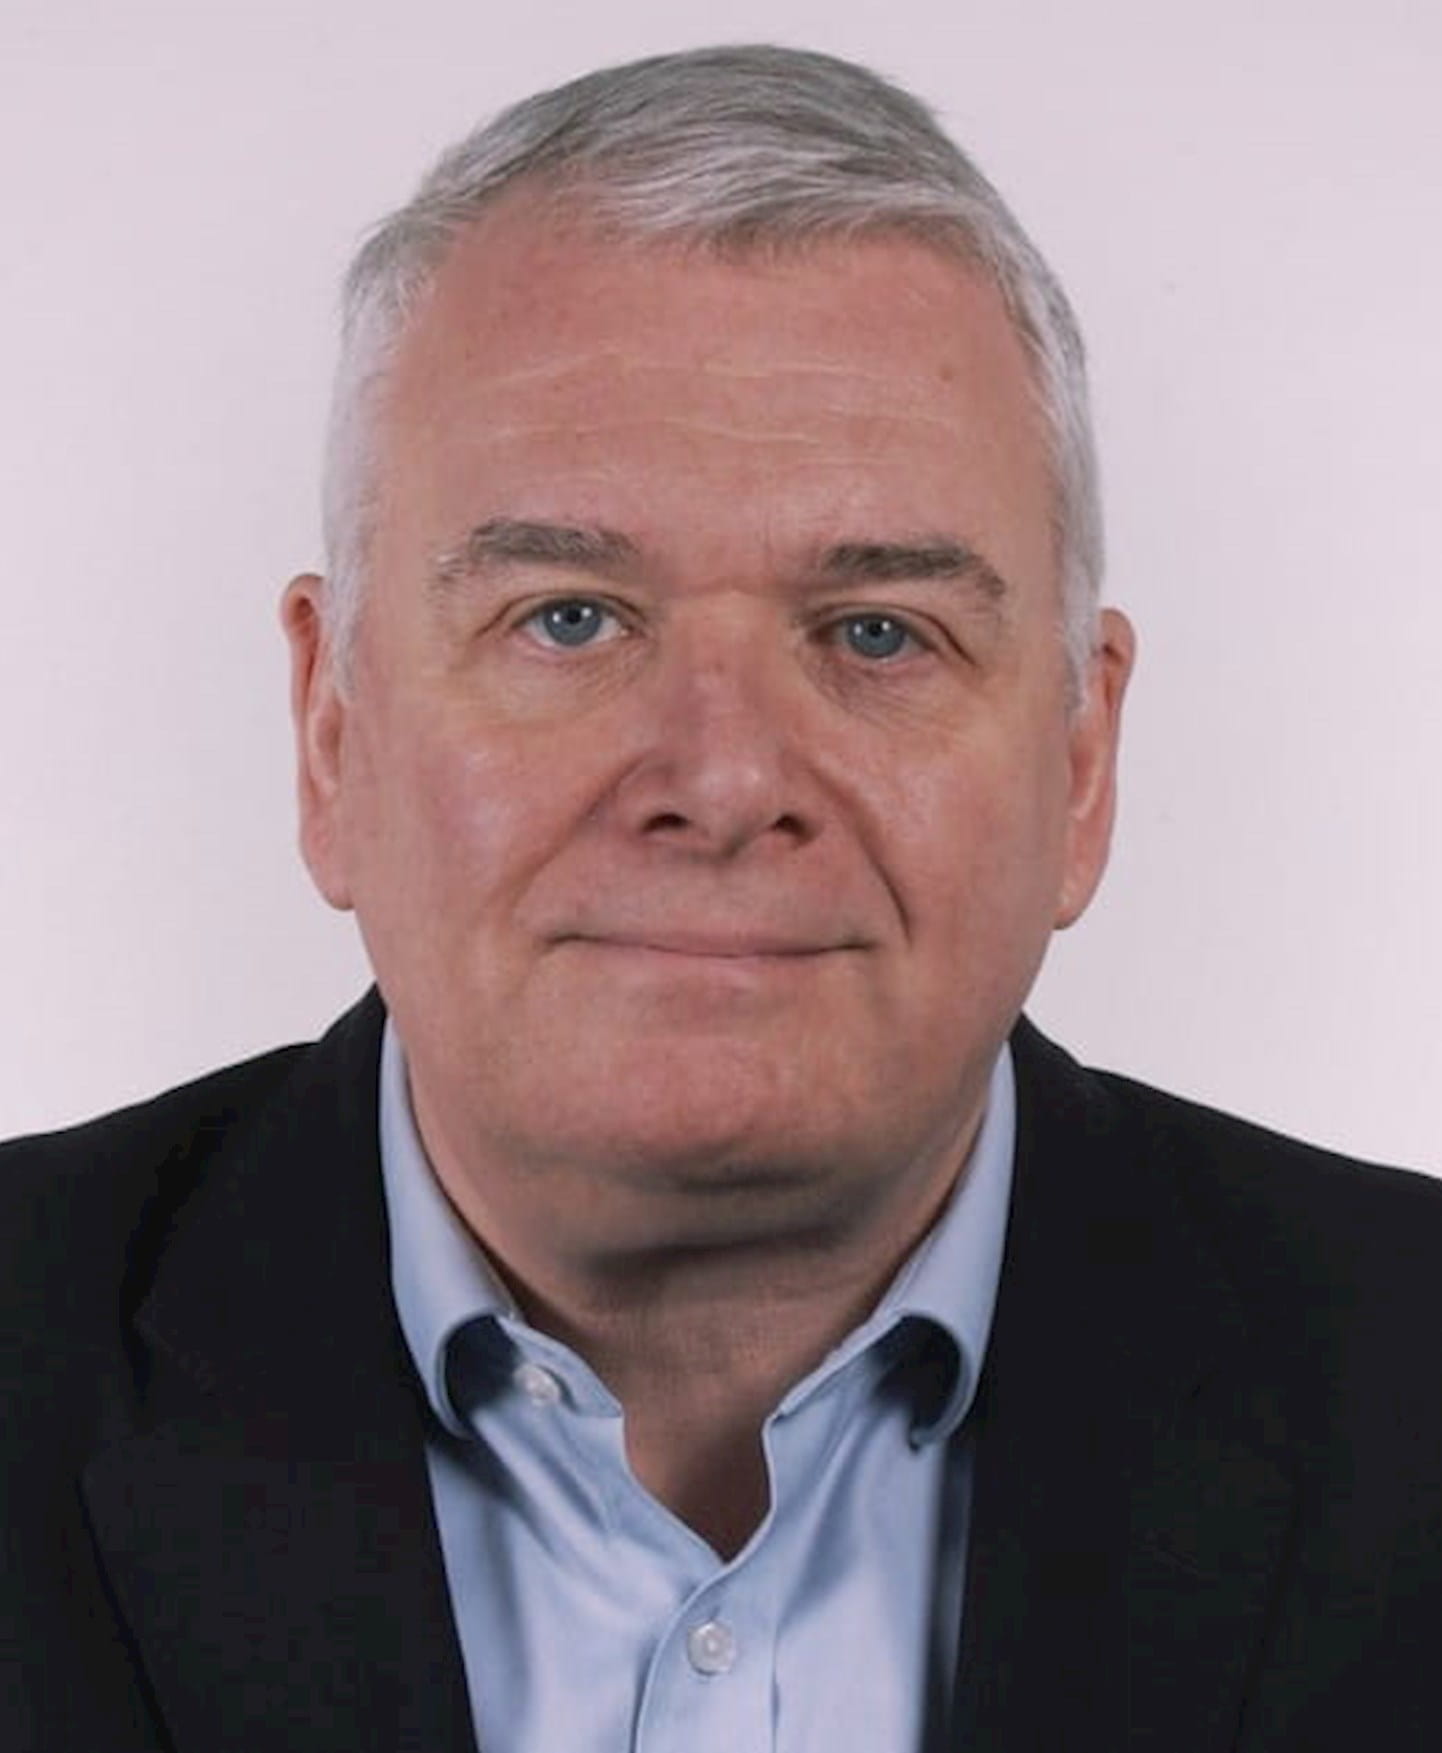 Profile picture of David Brooks, UK Practice Leader, Insurance at NTT DATA